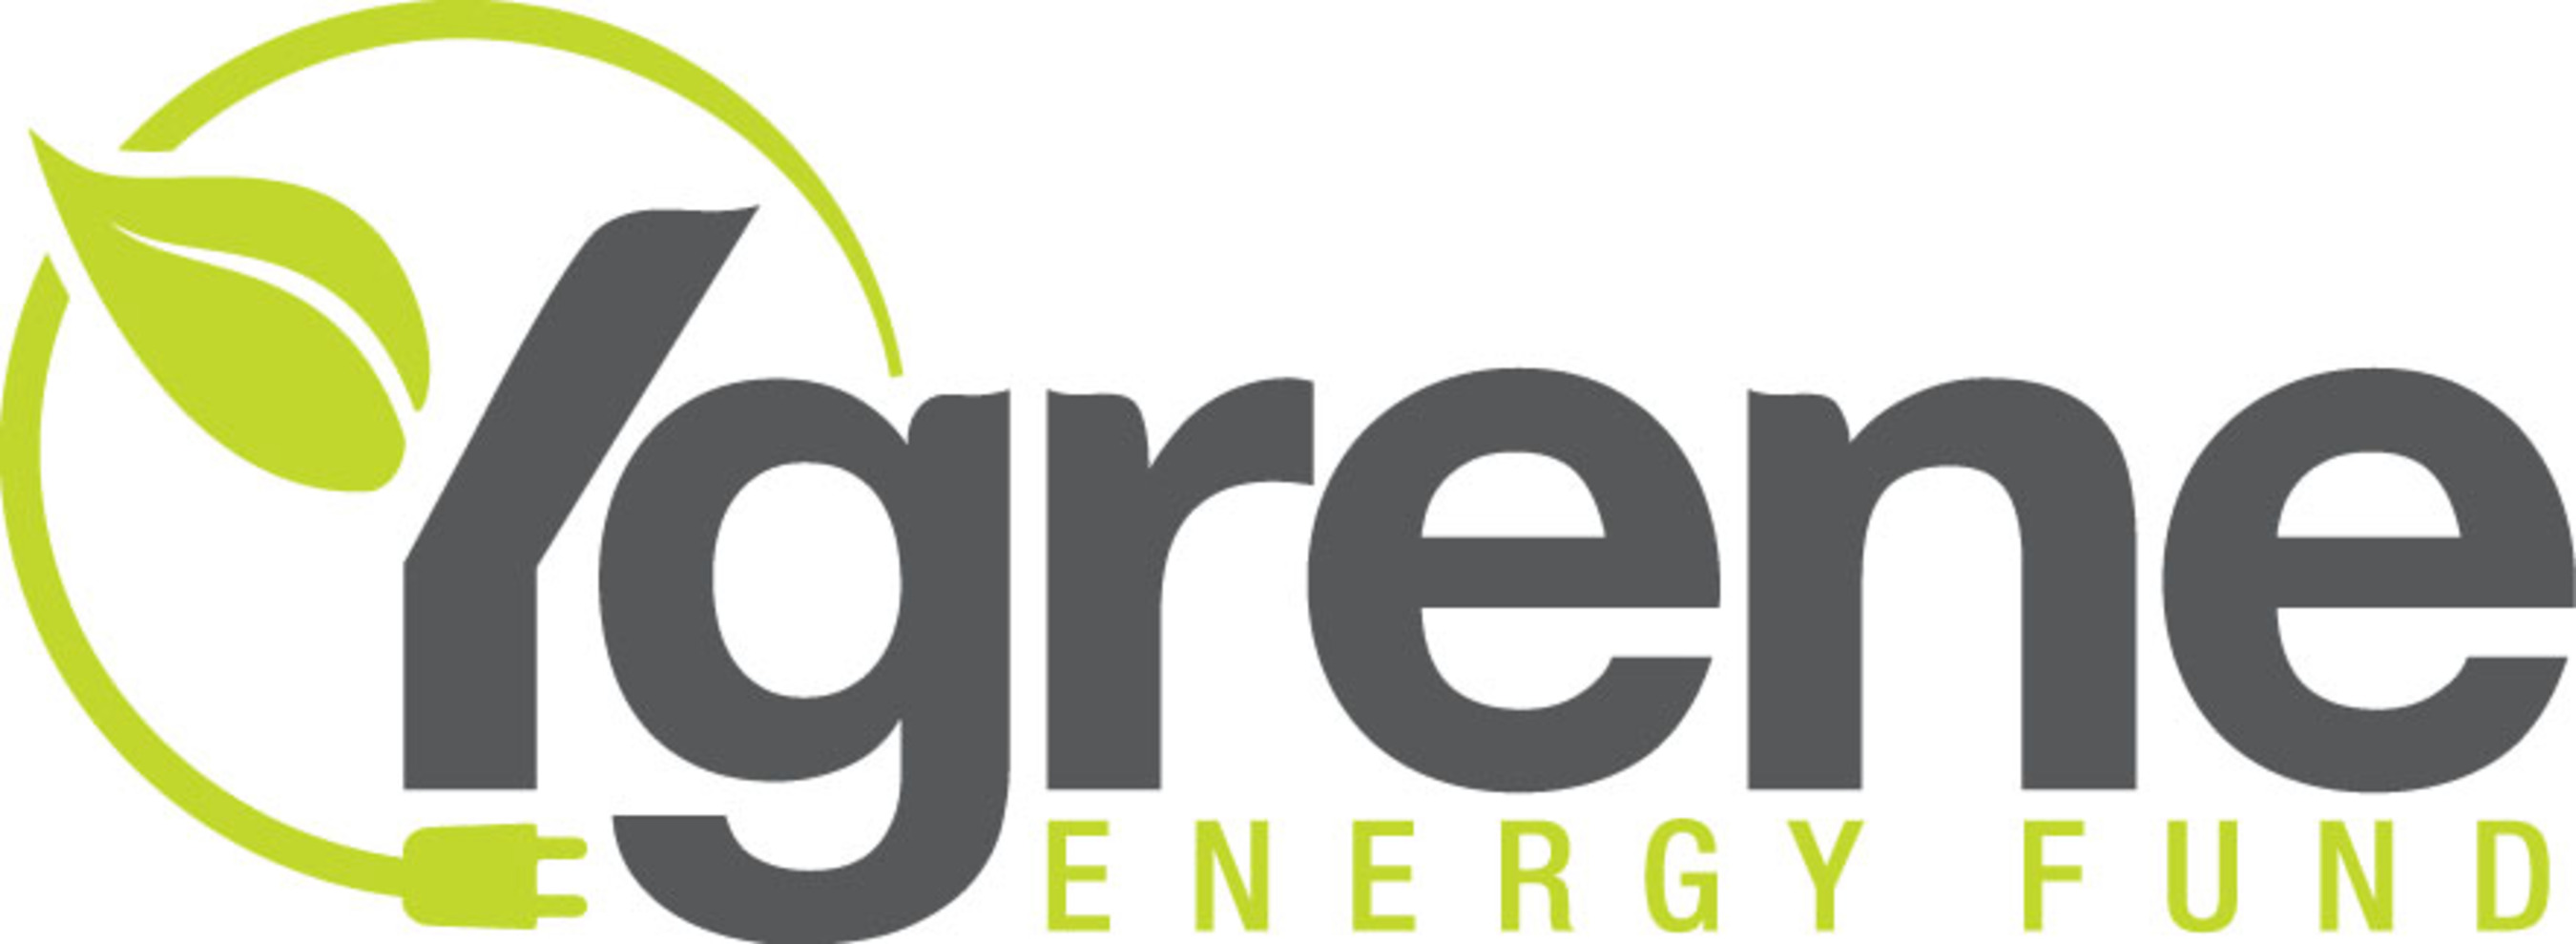 ygrene-energy-fund